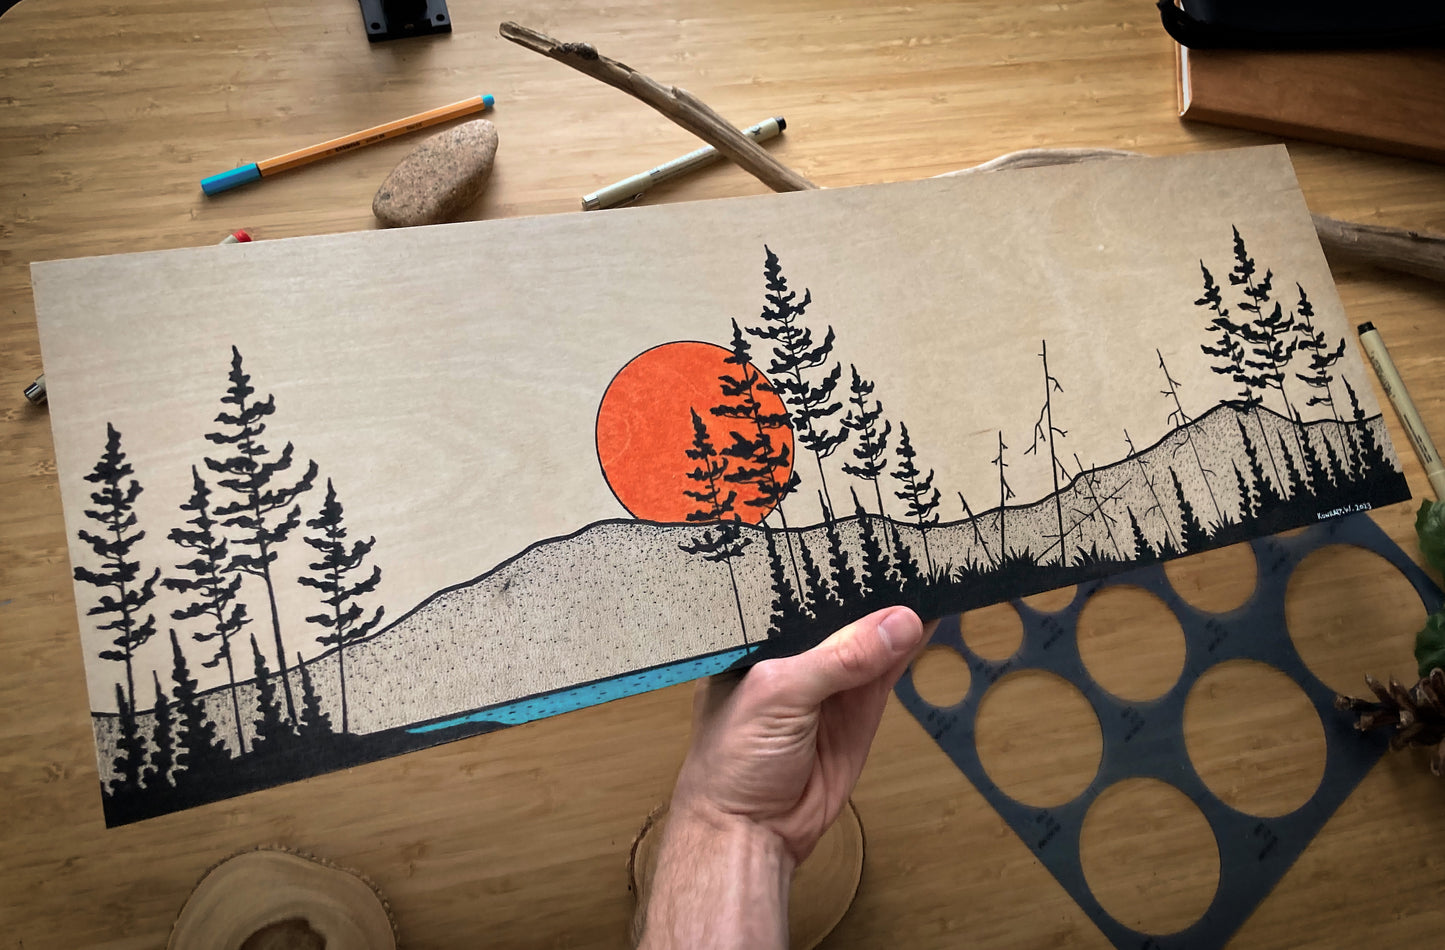 A Northern Panorama - ORIGINAL 8x24 Wood Panel Illustration